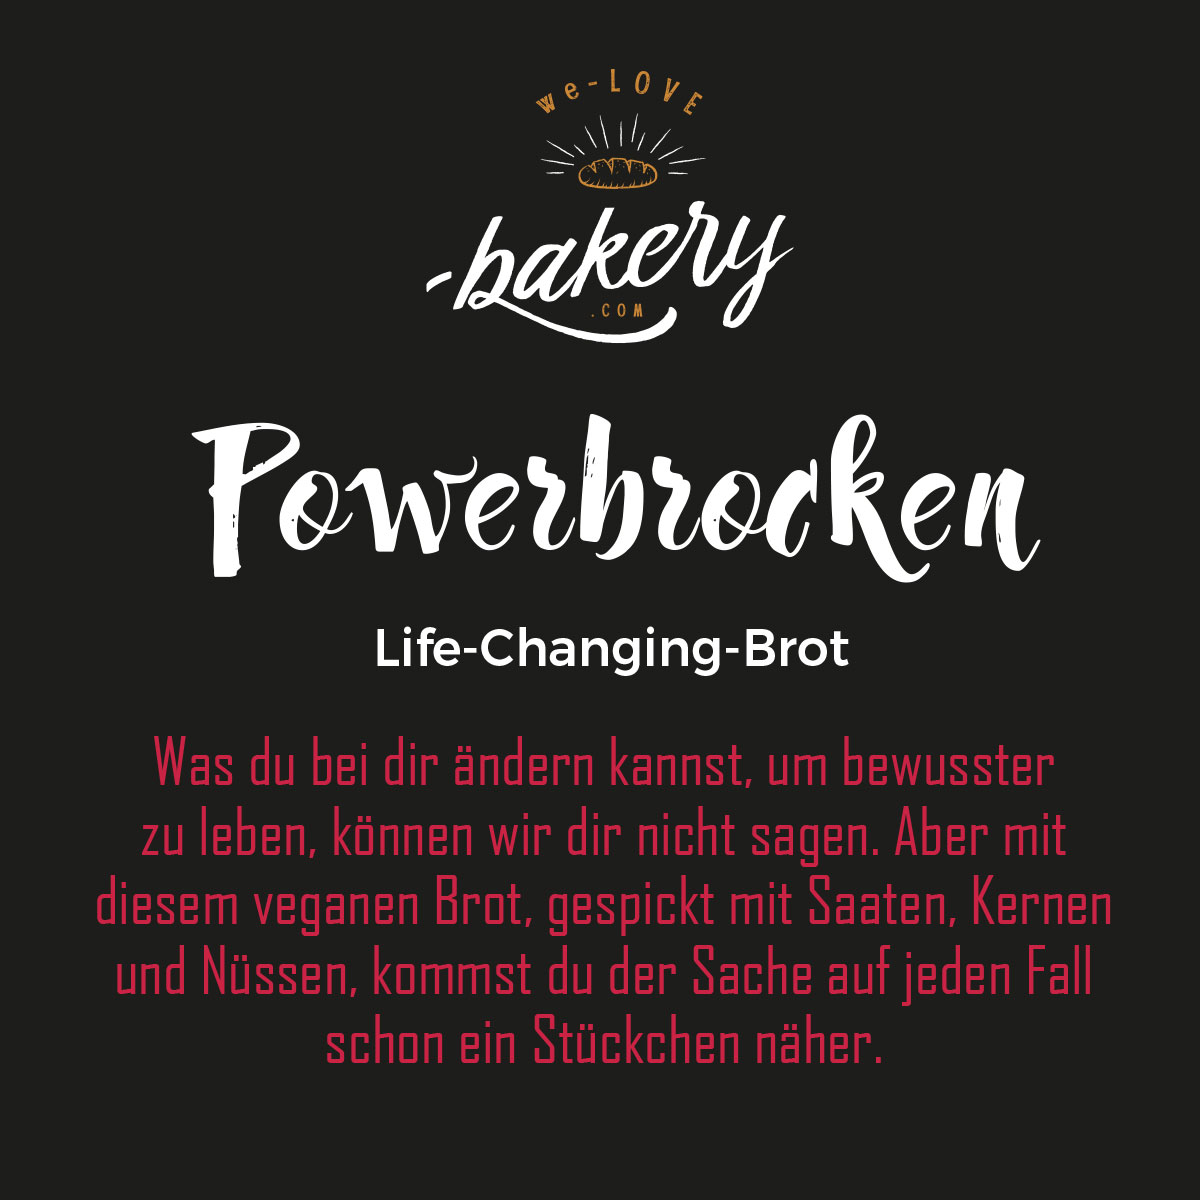 Life-Changing-Brot